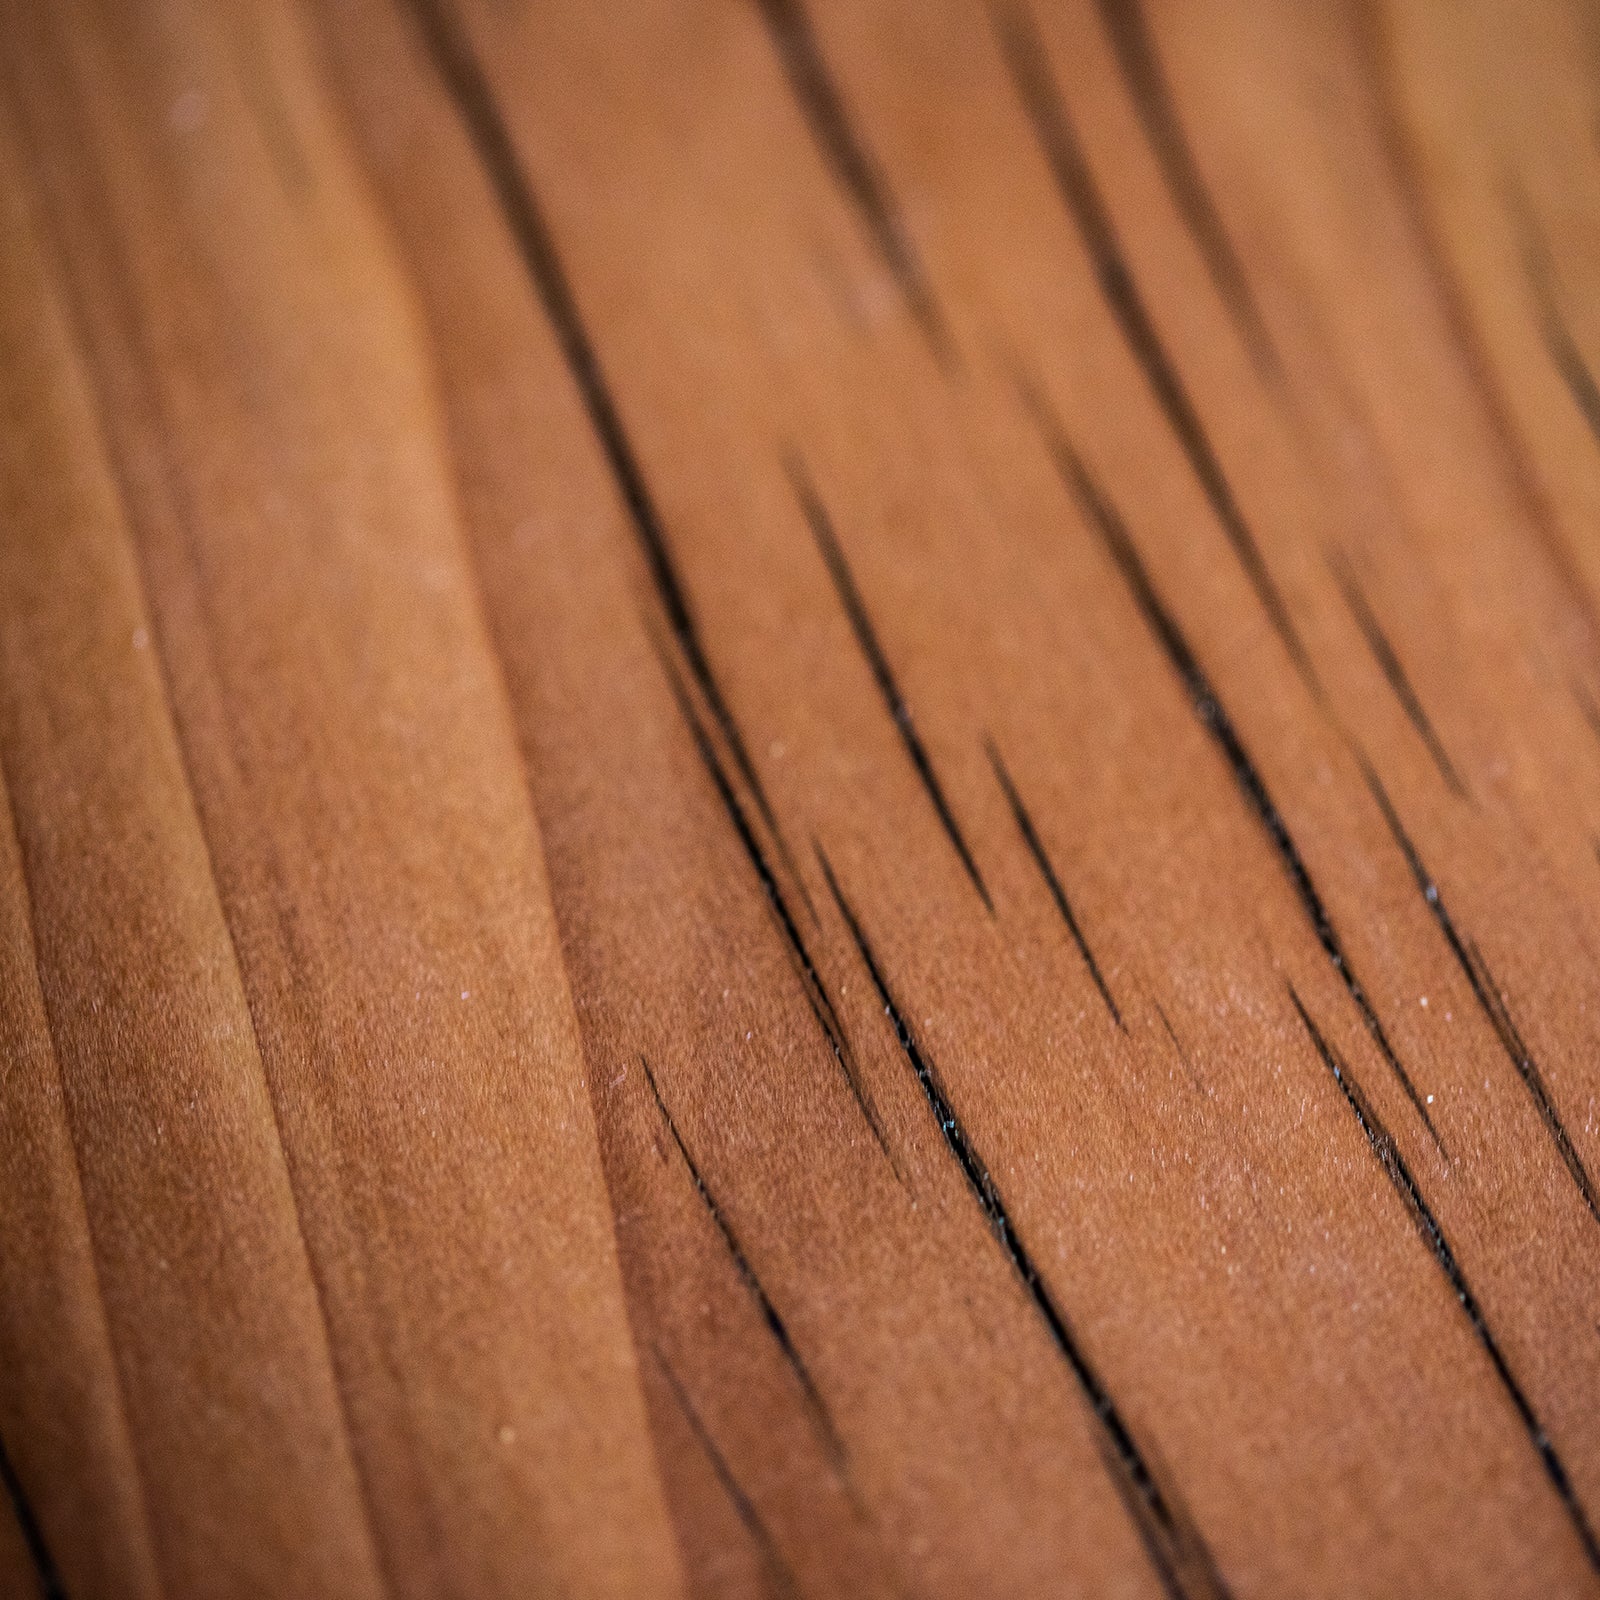 063 Torrey Pine Cutting Board